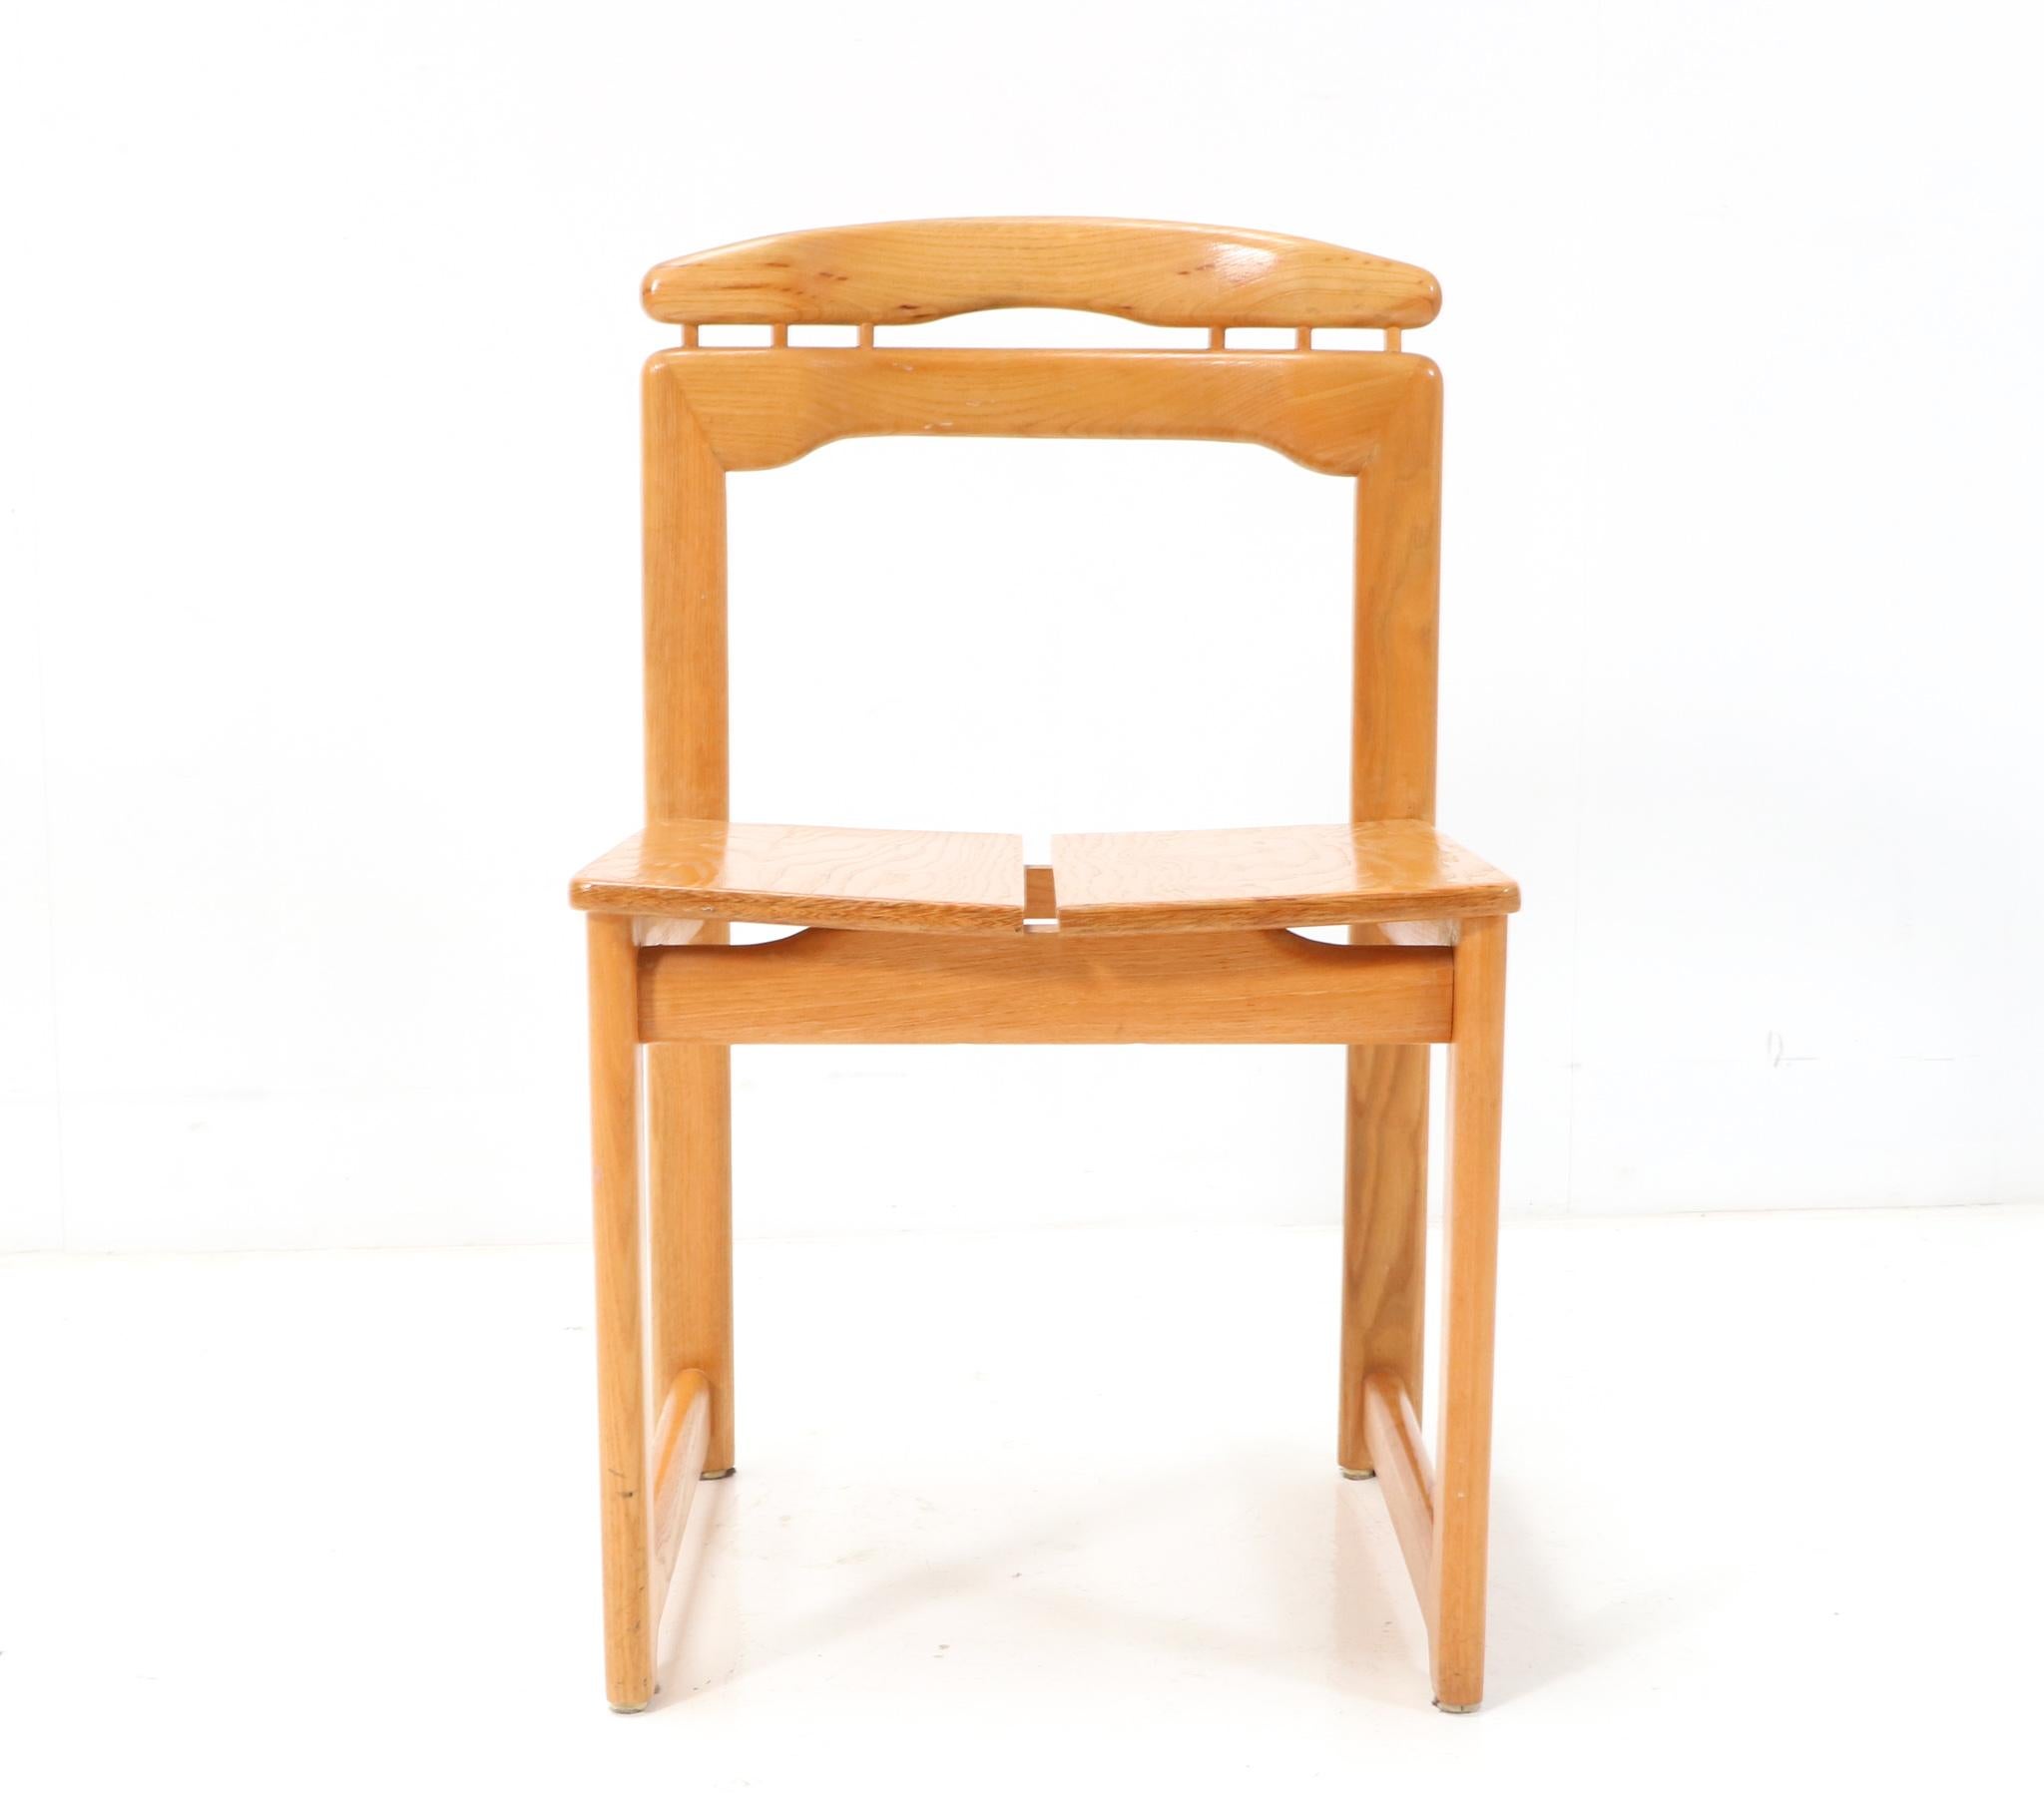 Four Ash Italian Mid-Century Modern Tapiovaara Style Chairs, 1970s For Sale 3